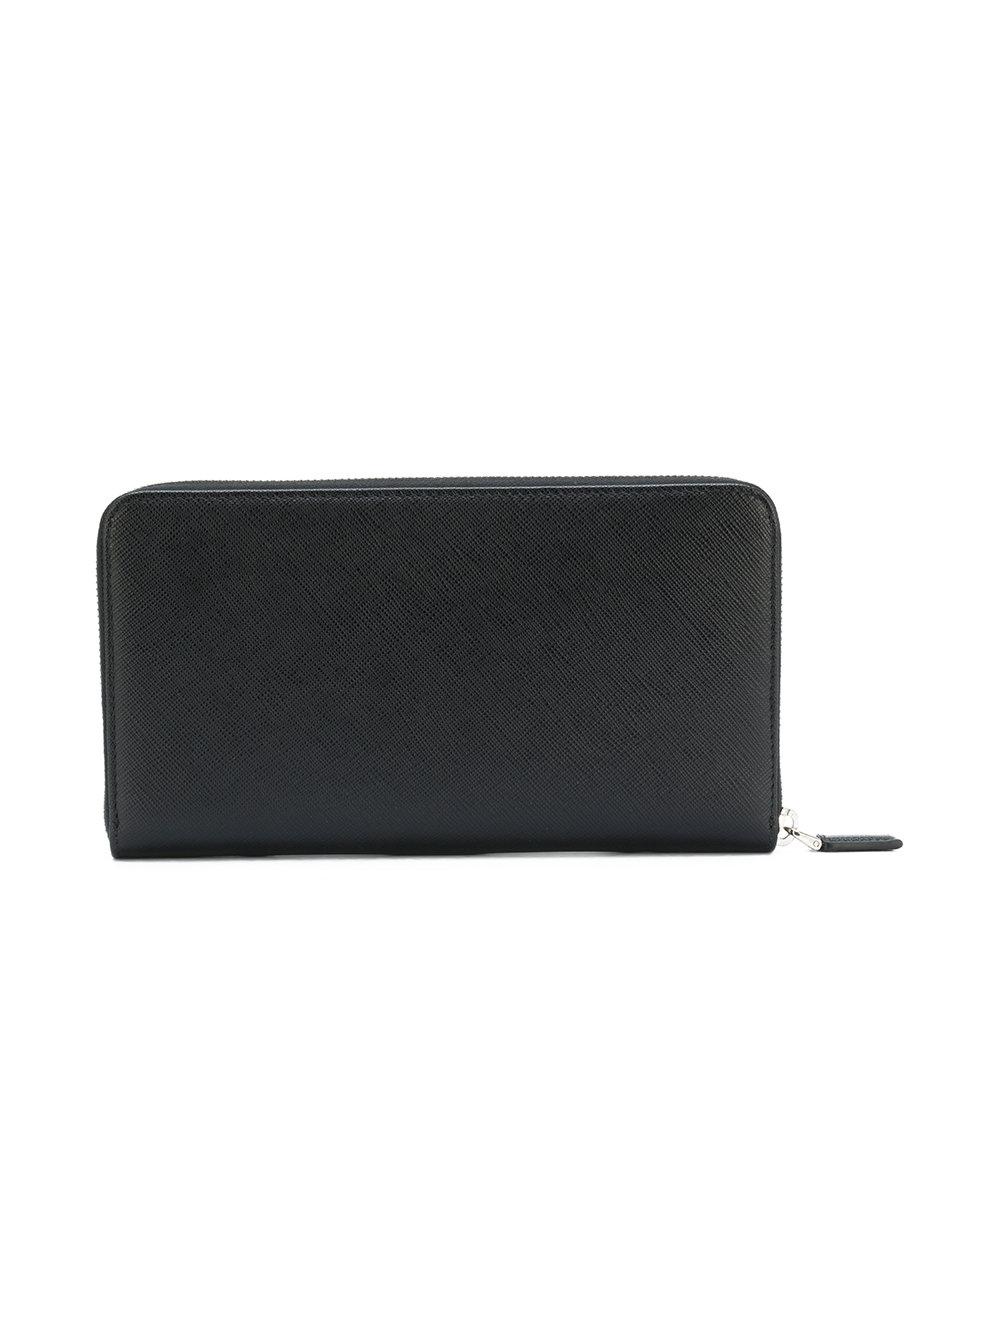 Prada Leather Zip Around Wallet in Black for Men - Lyst